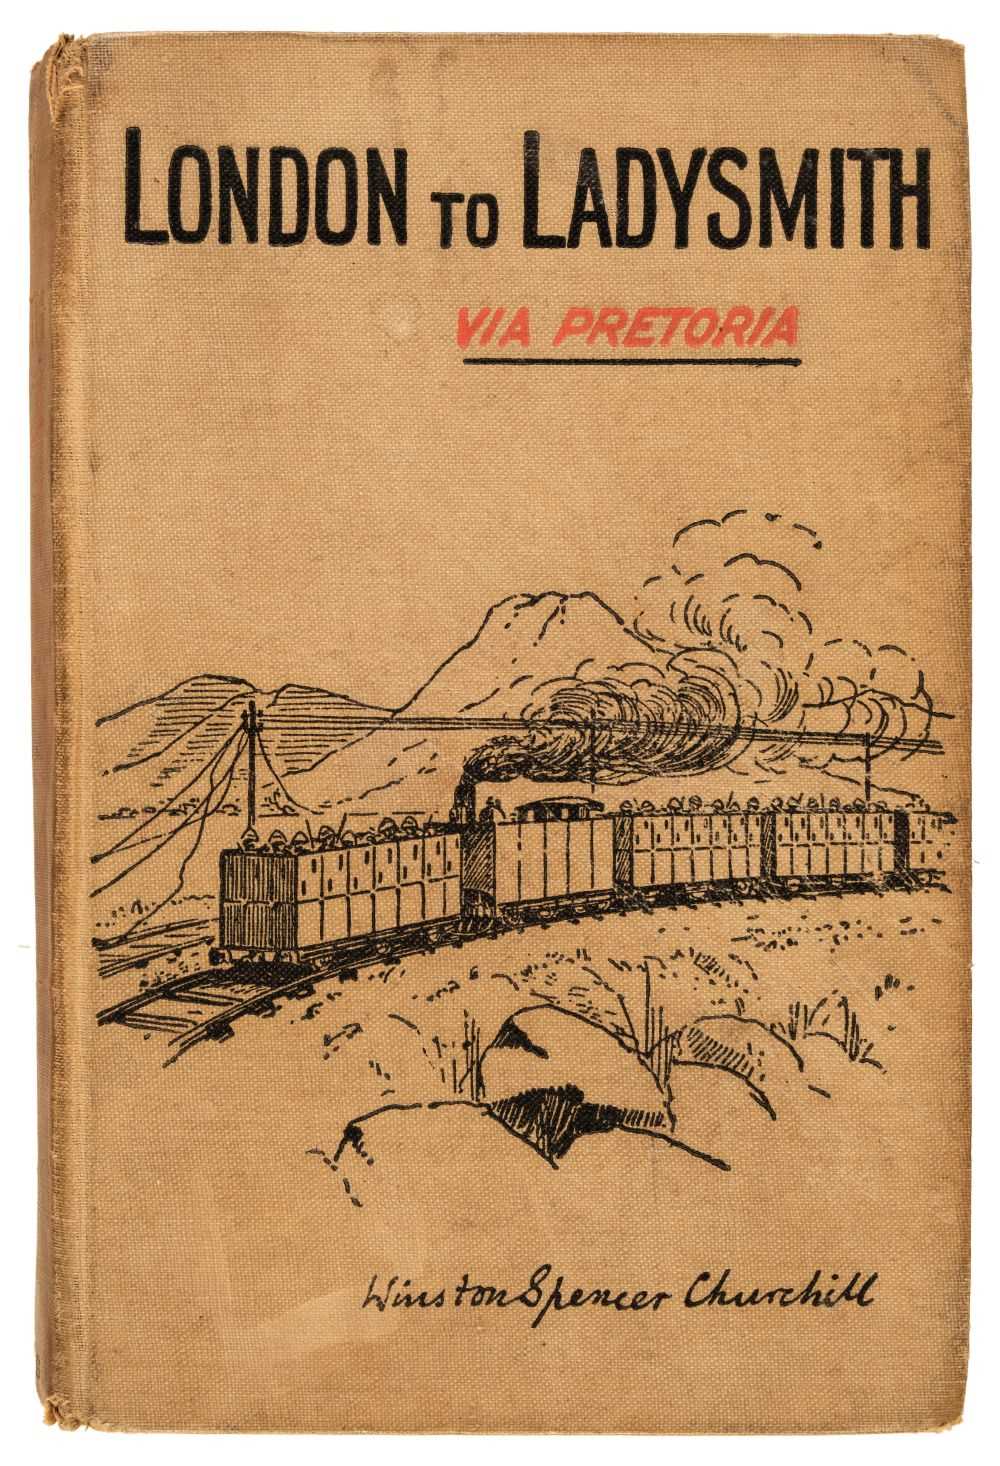 Lot 343 - Churchill (Winston S.) London to Ladysmith via Pretoria, 1st edition, 1900